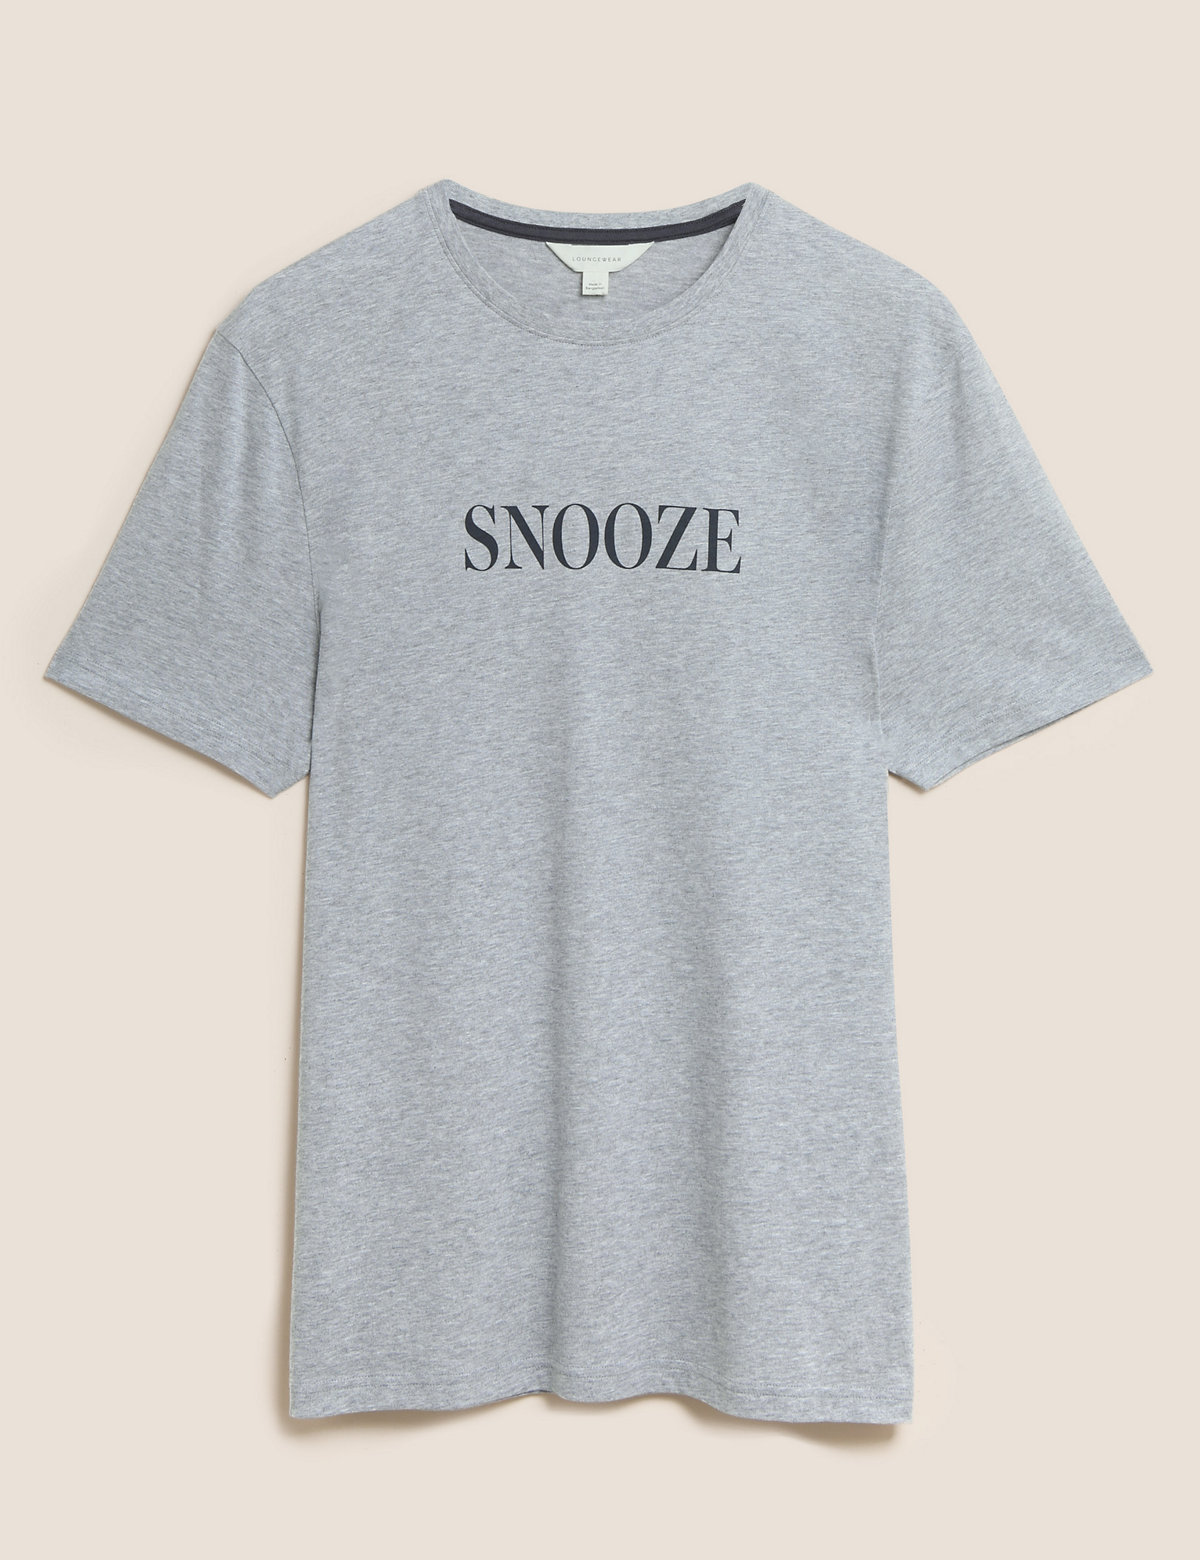 Pure Cotton Snooze Slogan Loungewear Top